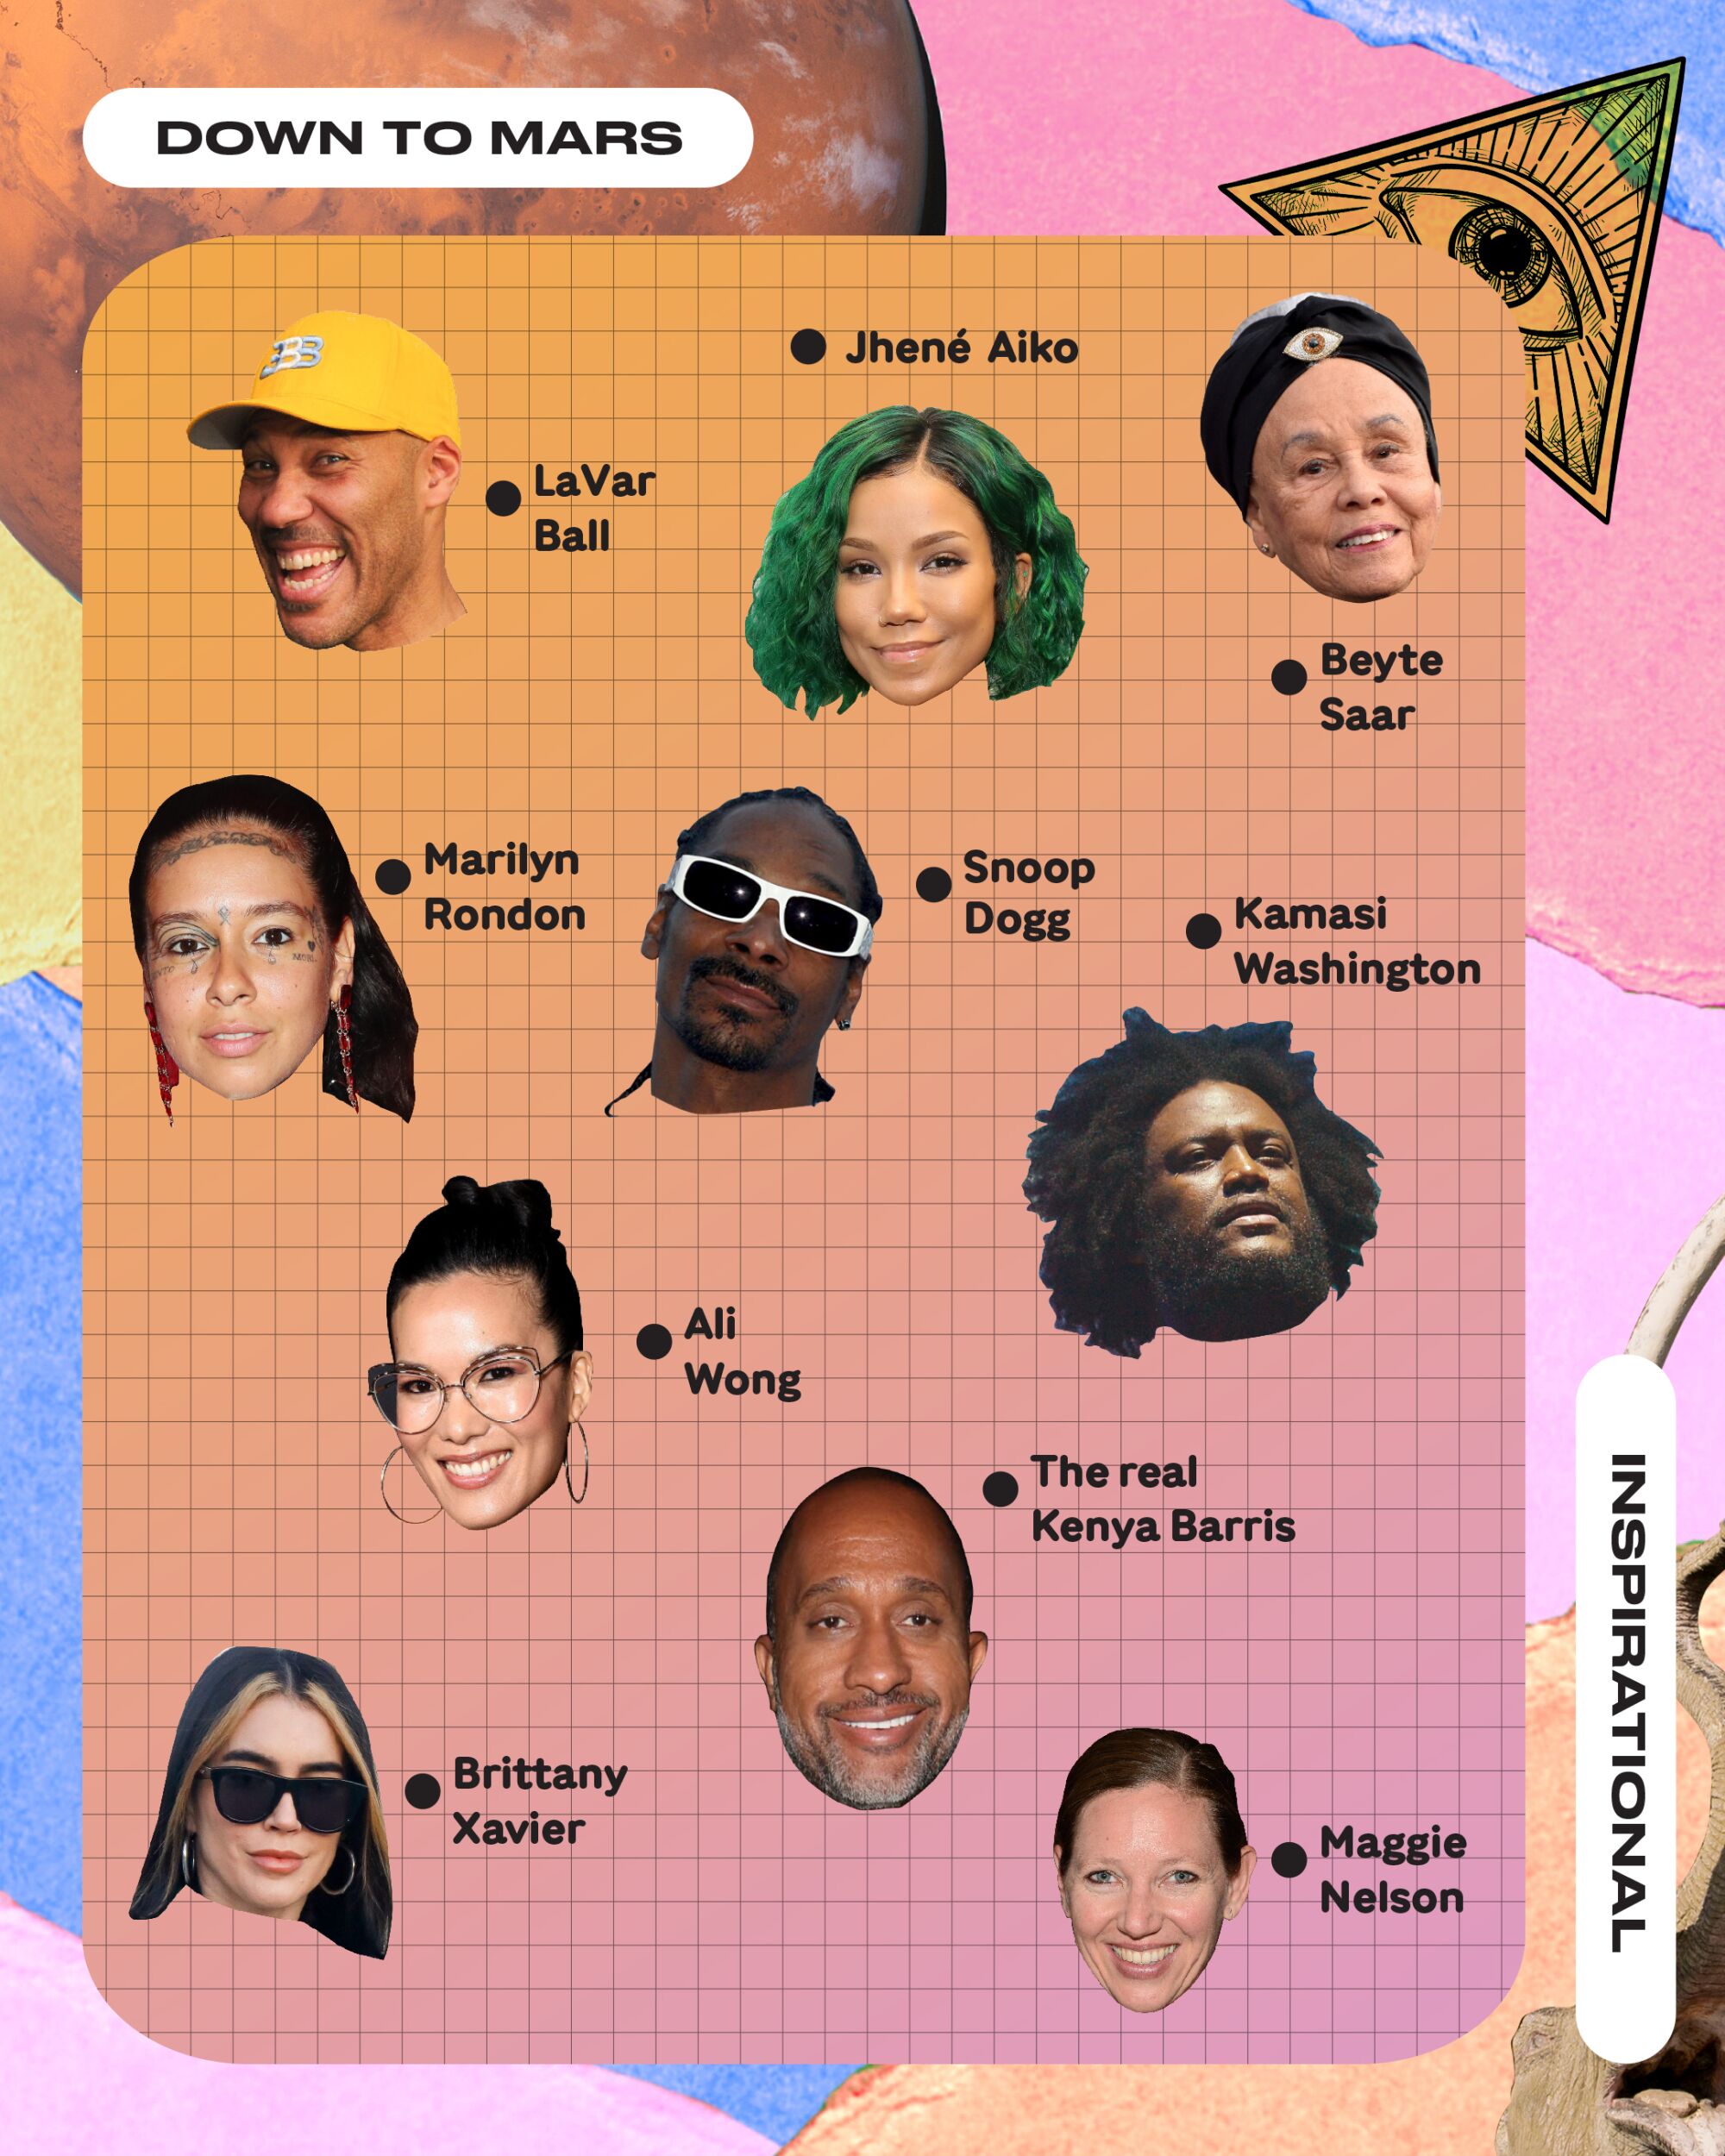 colorful matrix chart with cool L.A. parents like Snoop Dogg, Kamasi Washington, Ali Wong, The real Kenya Barris